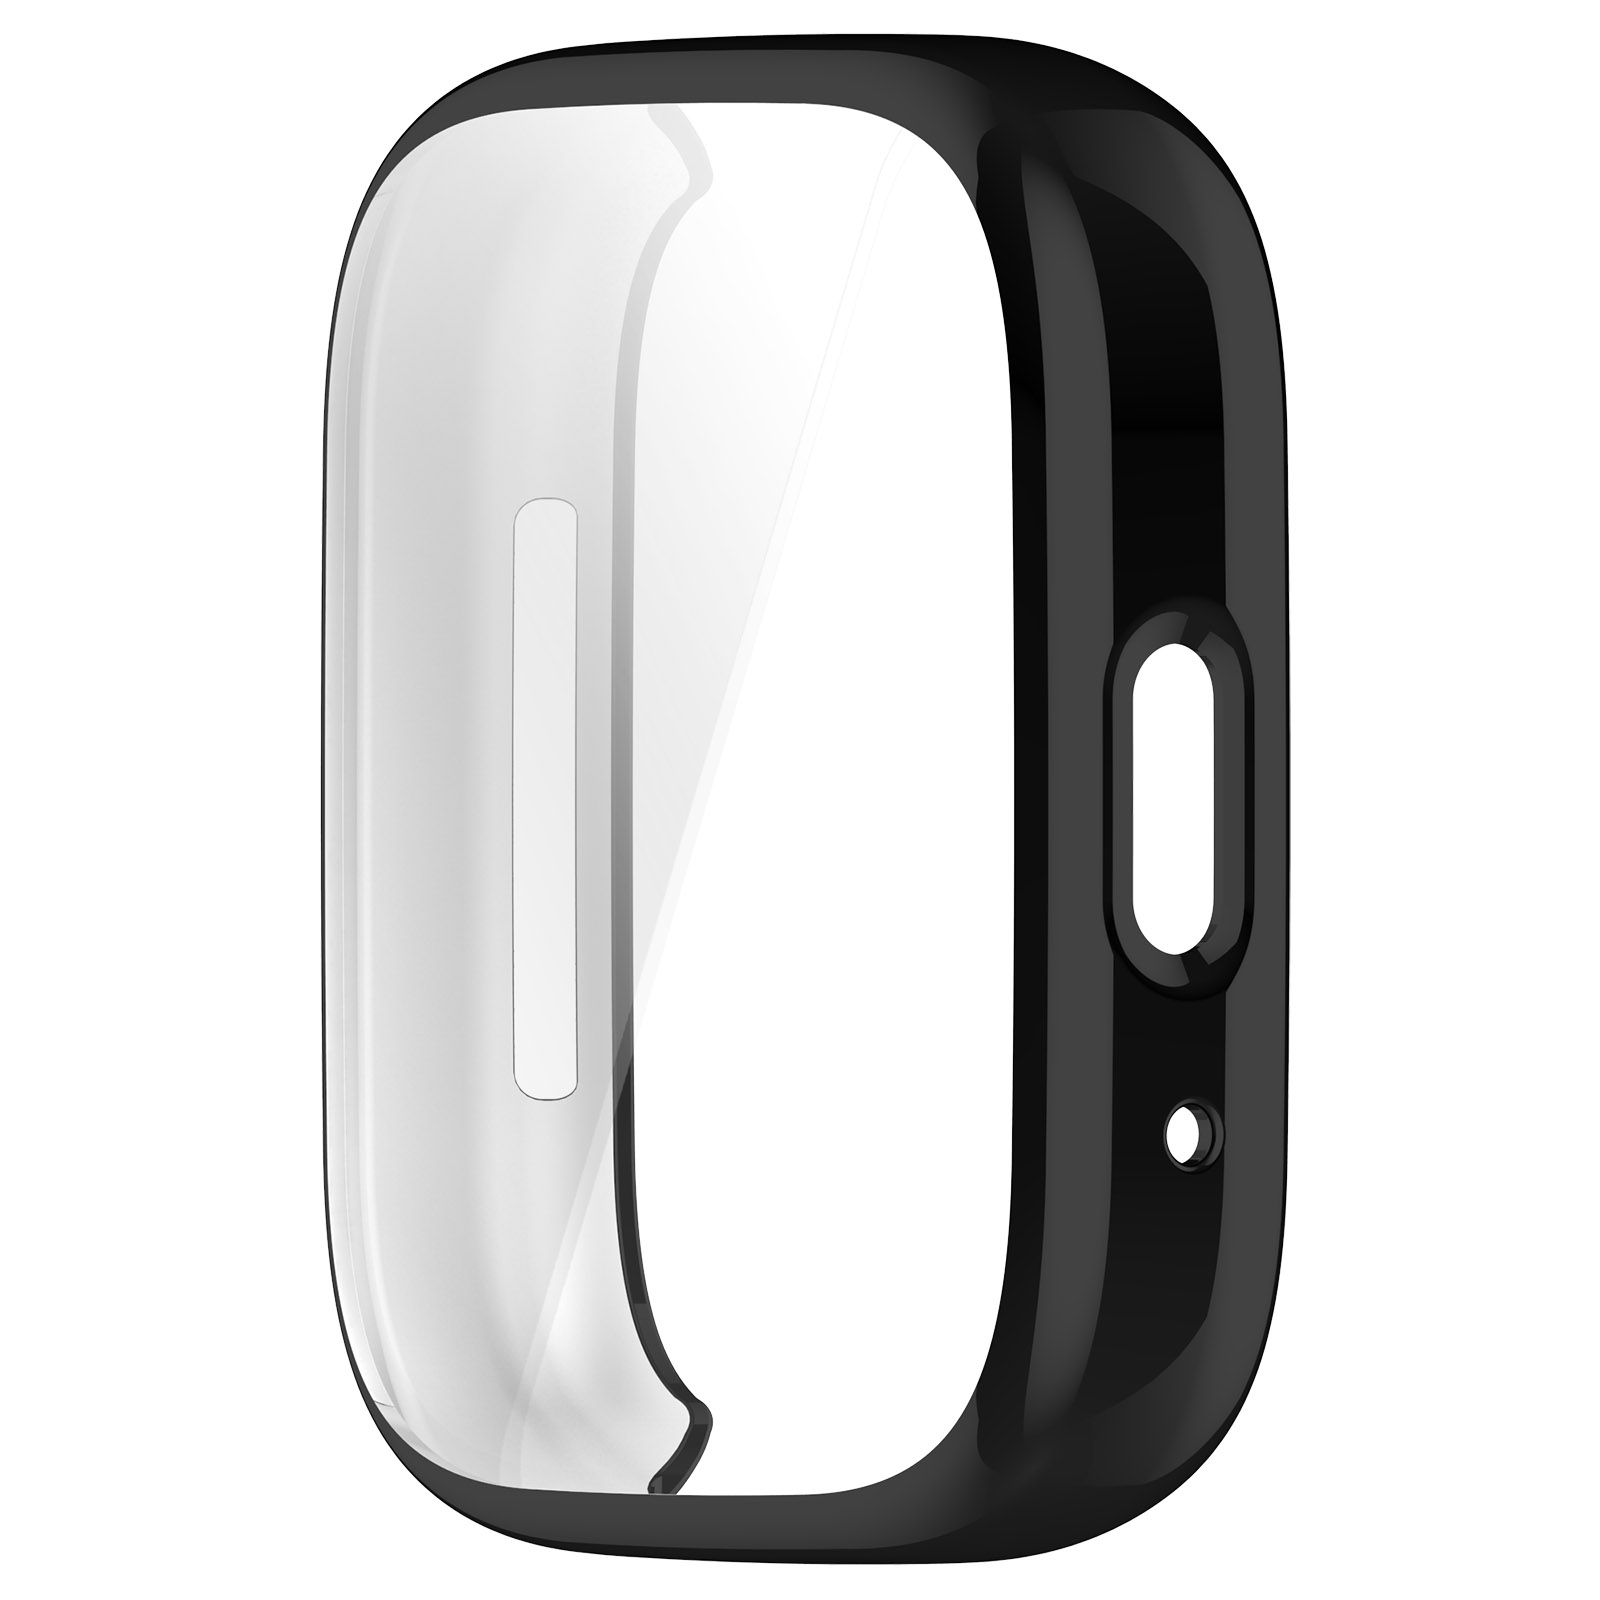 Pc Class Case Redmi Watch 3 Lite 3 Active Smart Watch Bumper